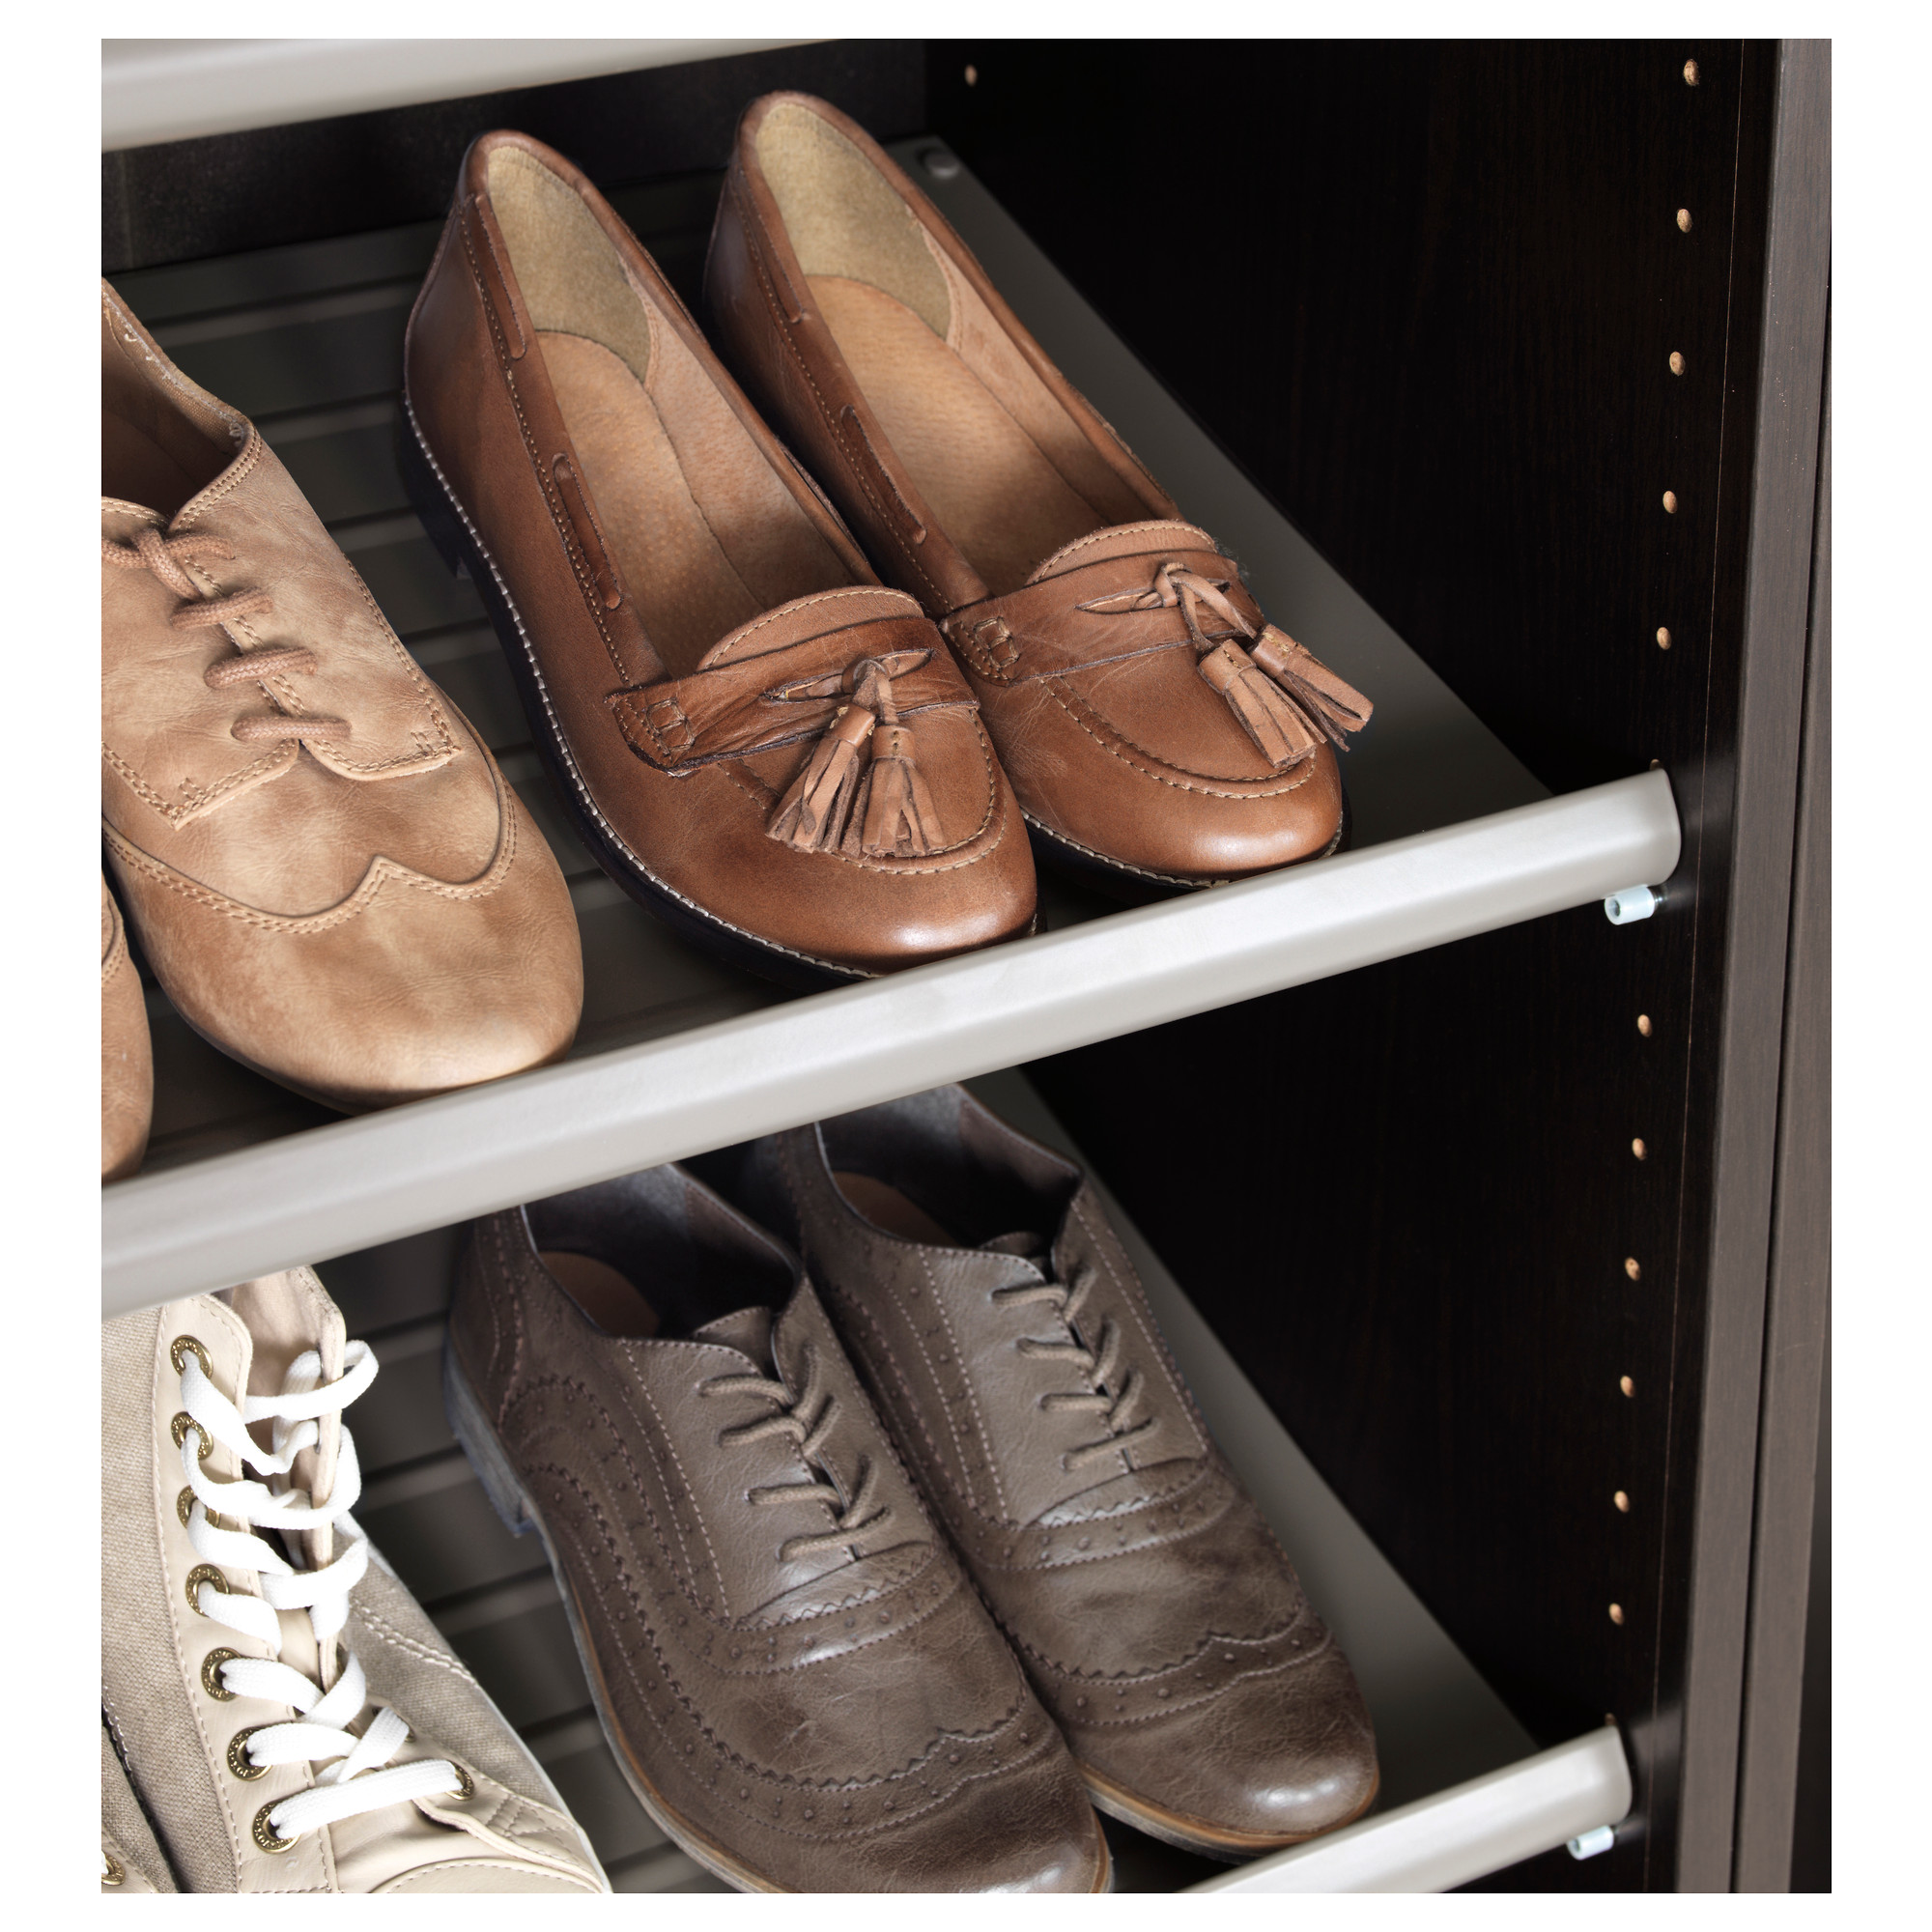 KOMPLEMENT shoe shelf